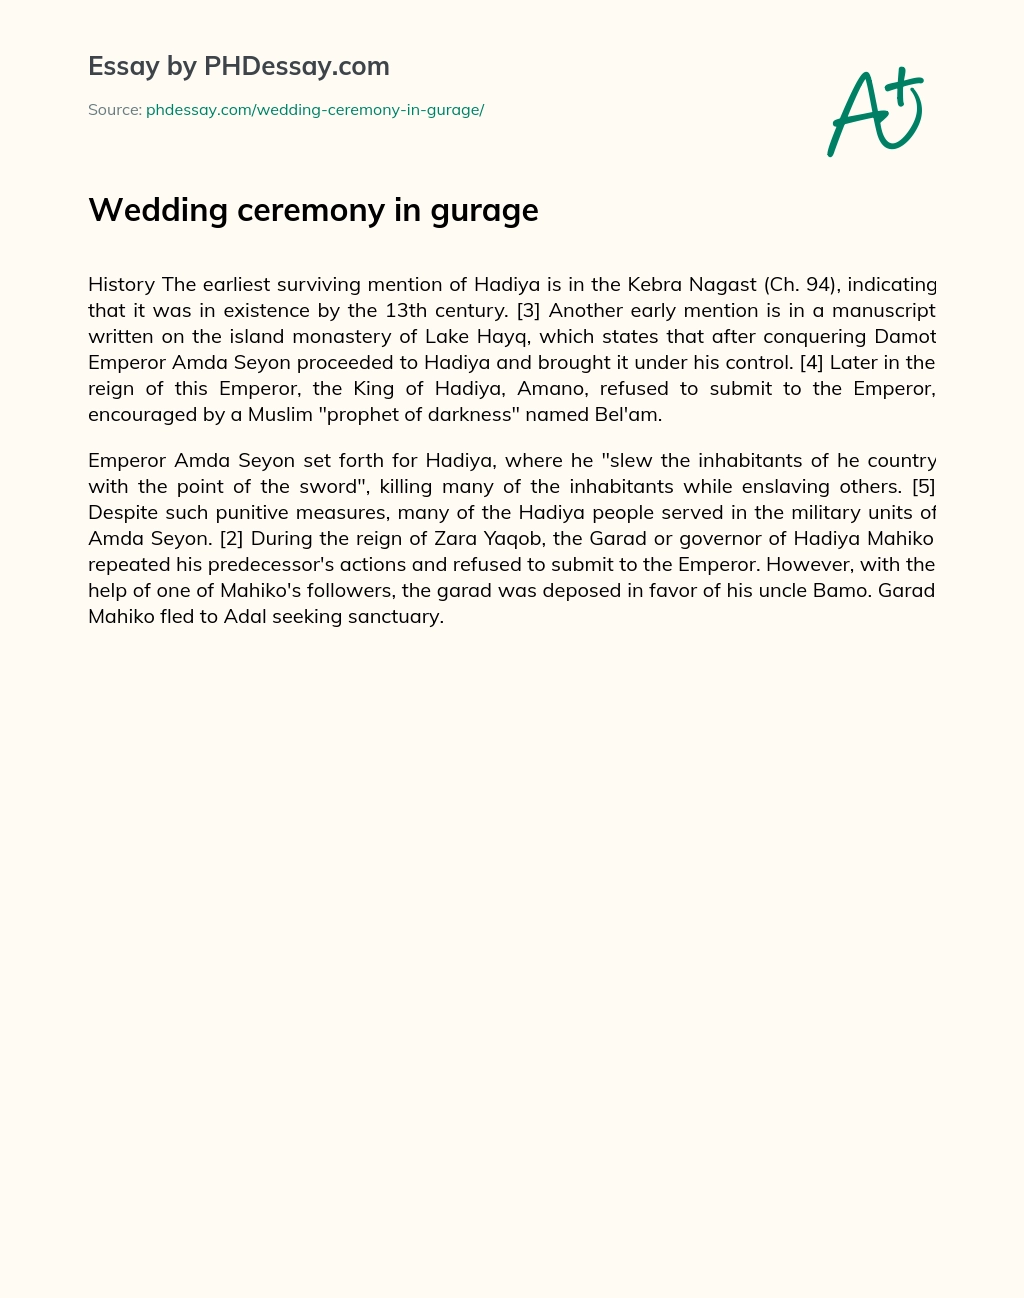 Wedding ceremony in gurage essay